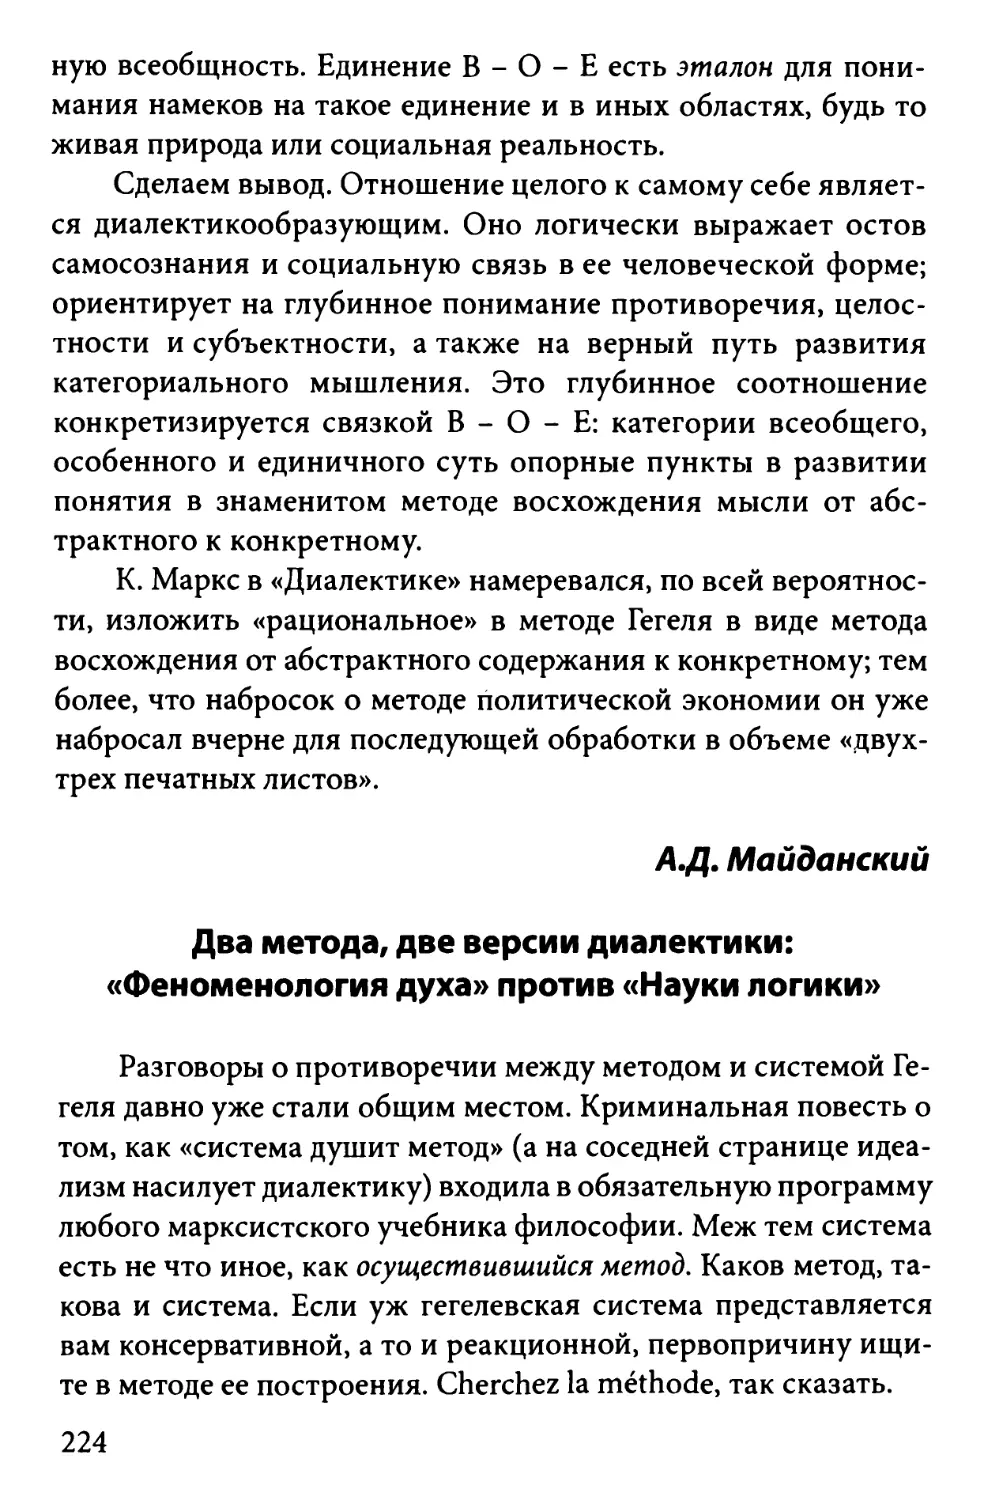 Майданский А.Д. Два метода, две версии диалектики: «Феноменология духа» против «Науки логики»